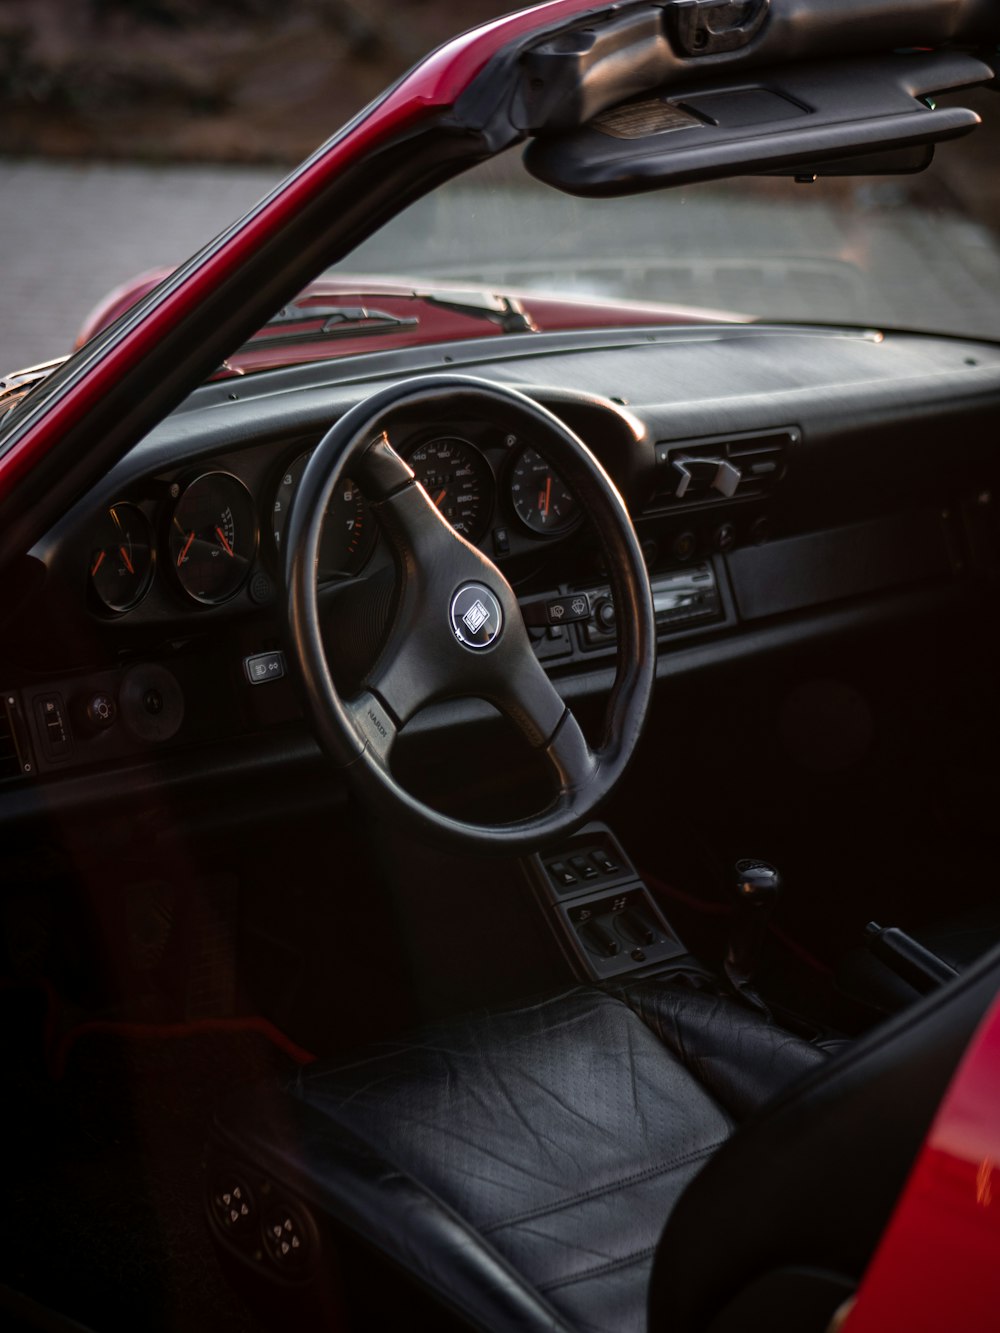 red vehicle with black steering wheel